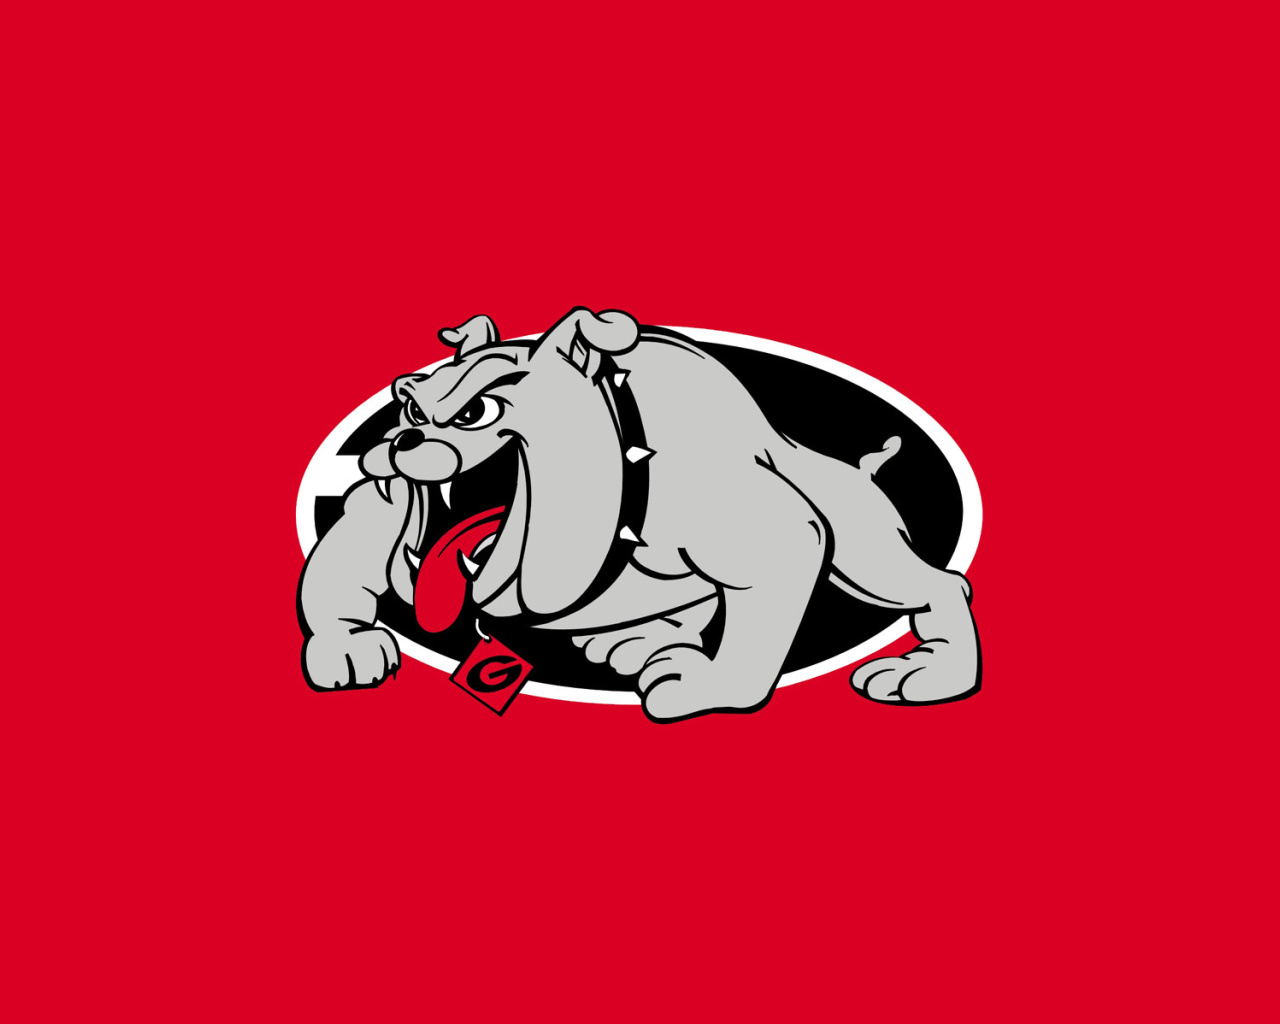 Обои Georgia Bulldogs University Team 1280x1024